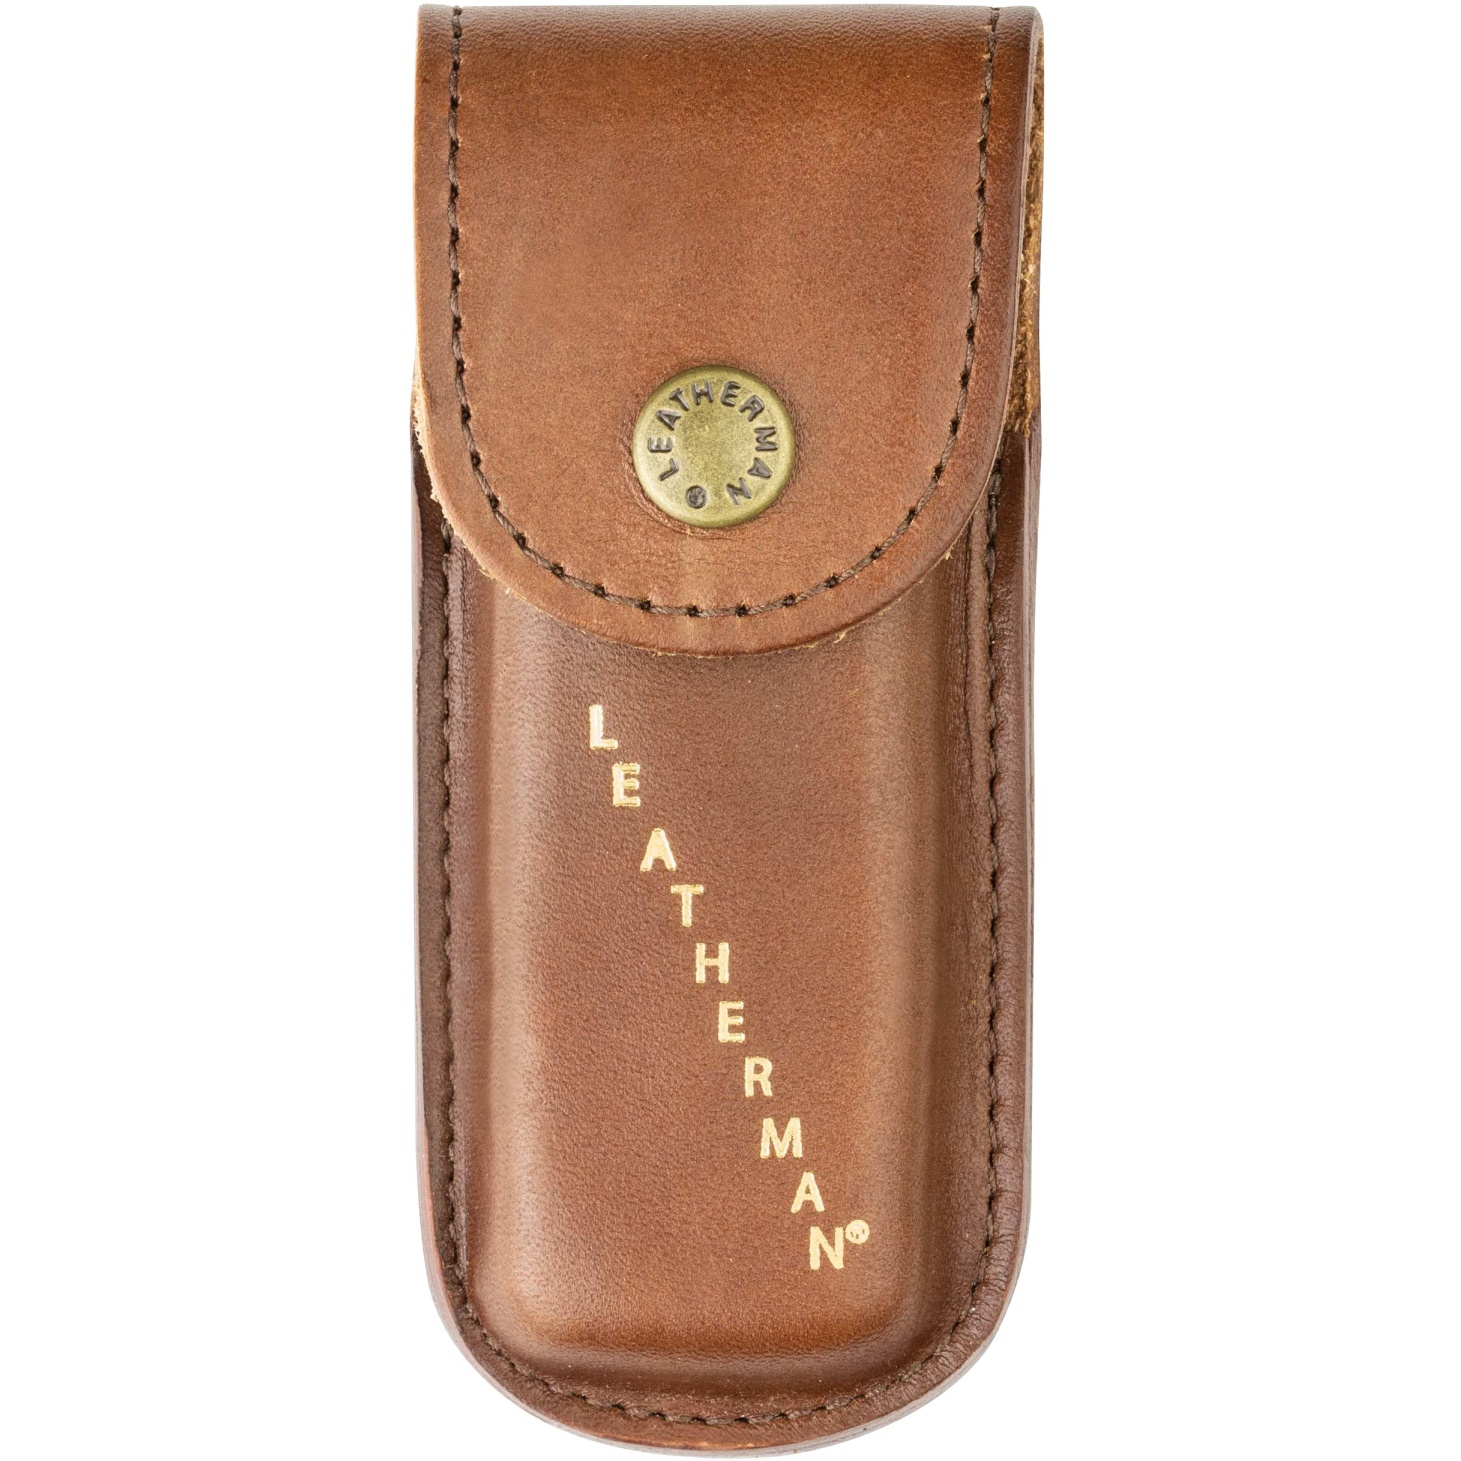 Produktbild von Leatherman Heritage Lederholster für Multitools - Small - Braun